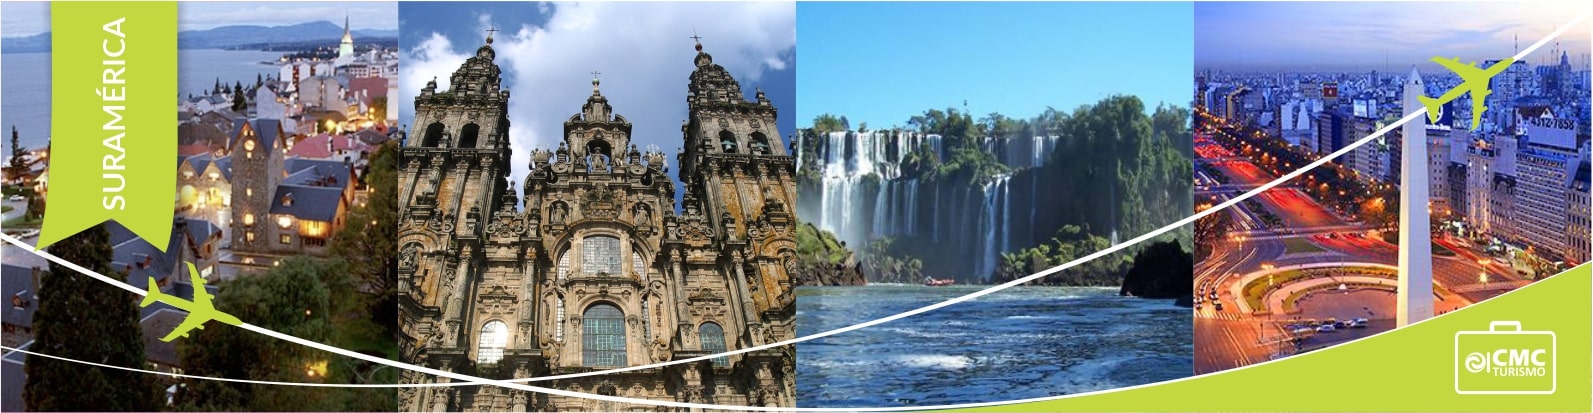 cabecera para pdf excursiones Suramerica CMC Turismo-min